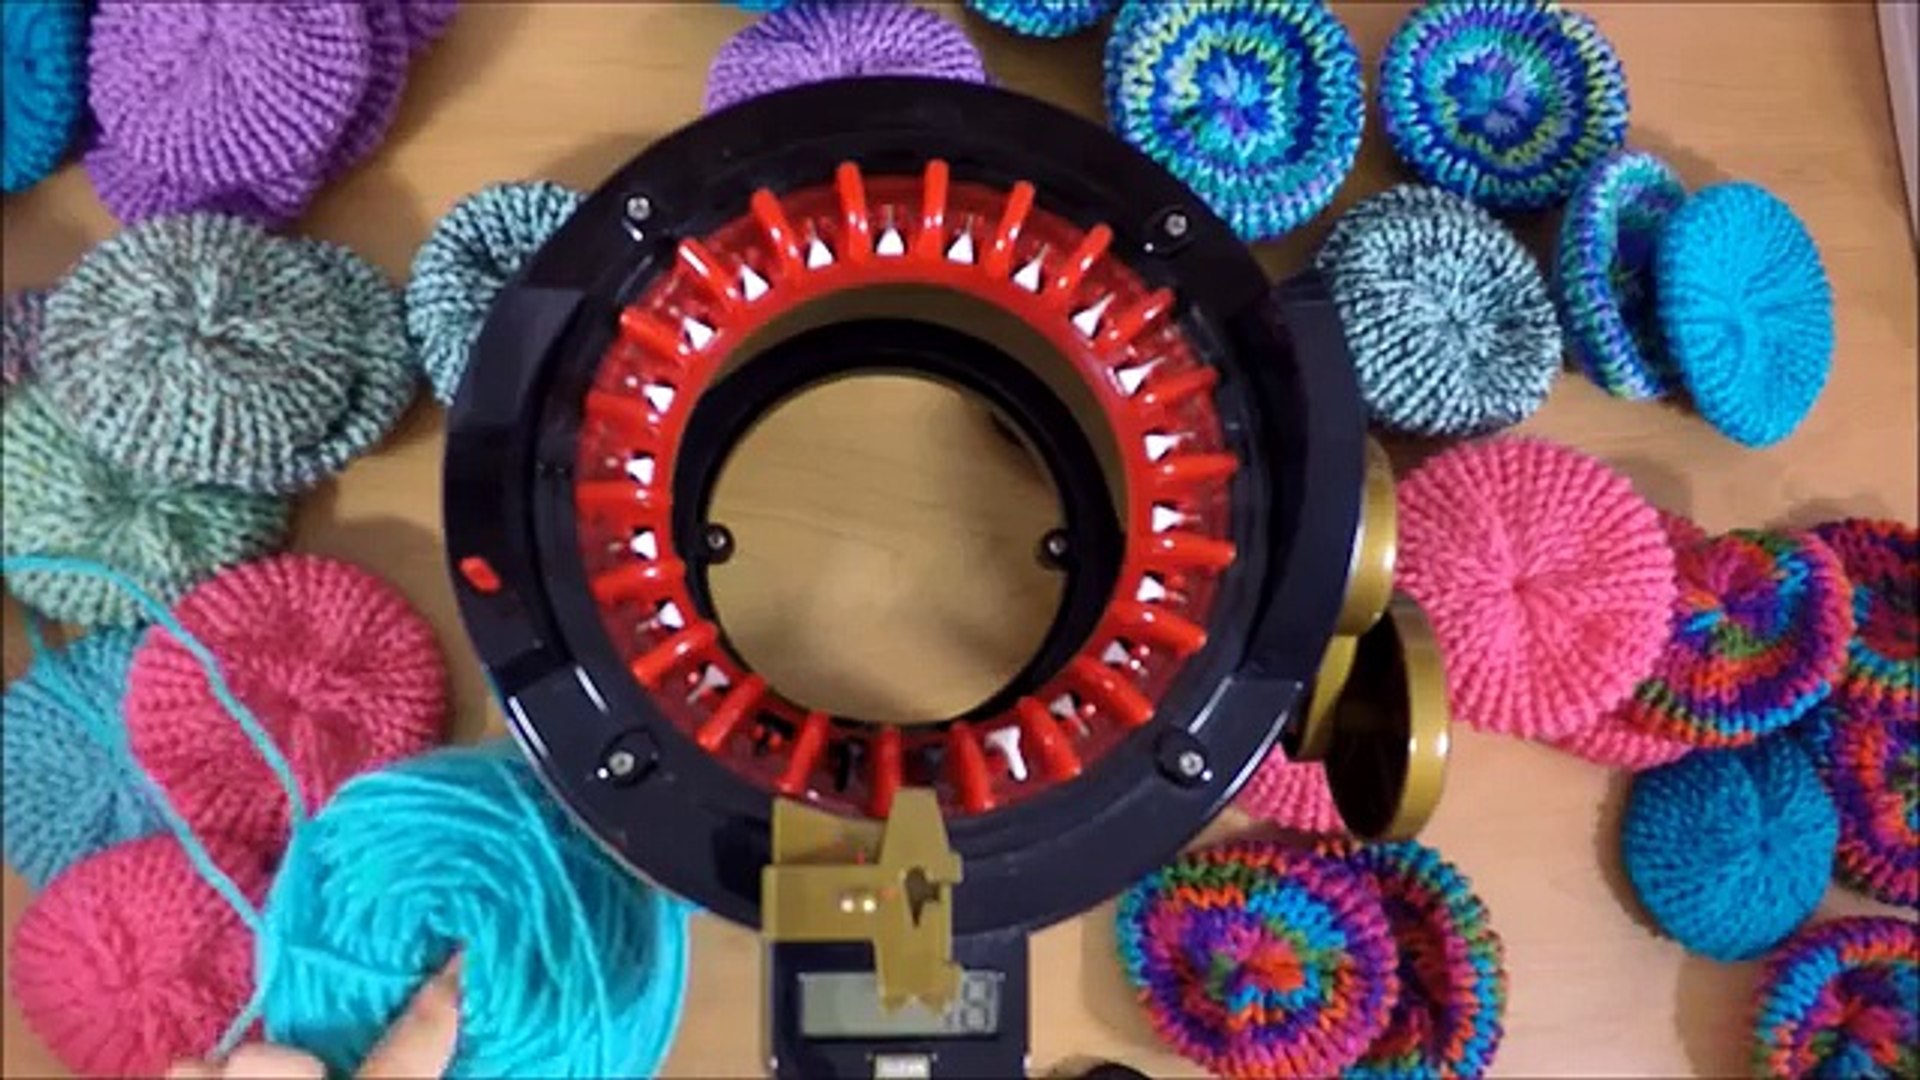 Addi Express King Vs. Toy Knitting Machine 